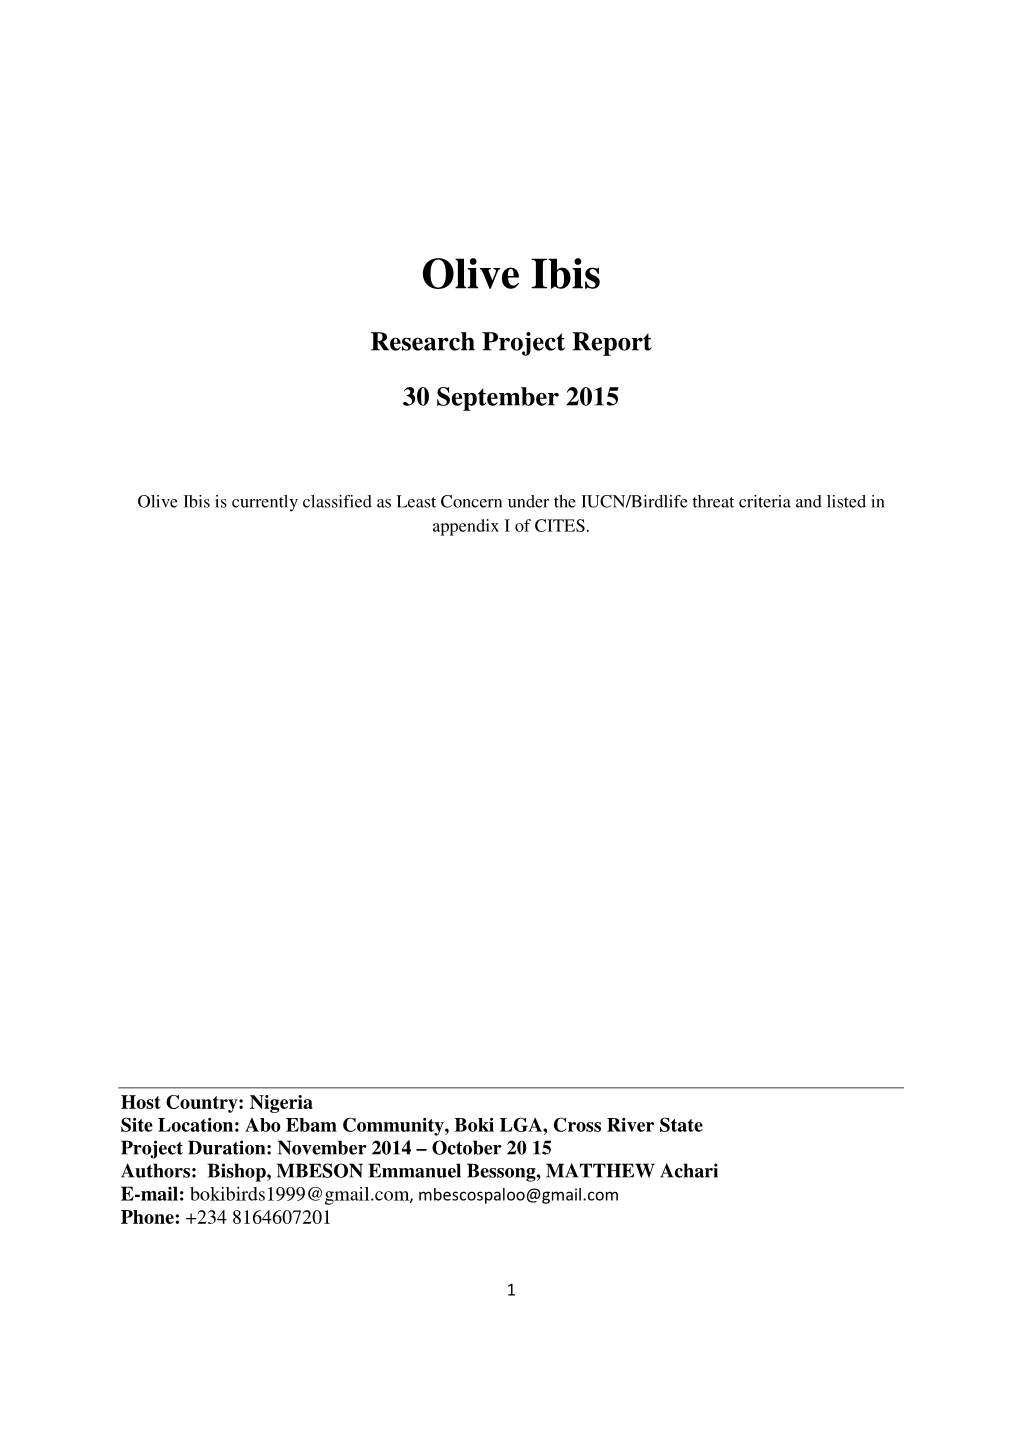 Olive Ibis Conservation